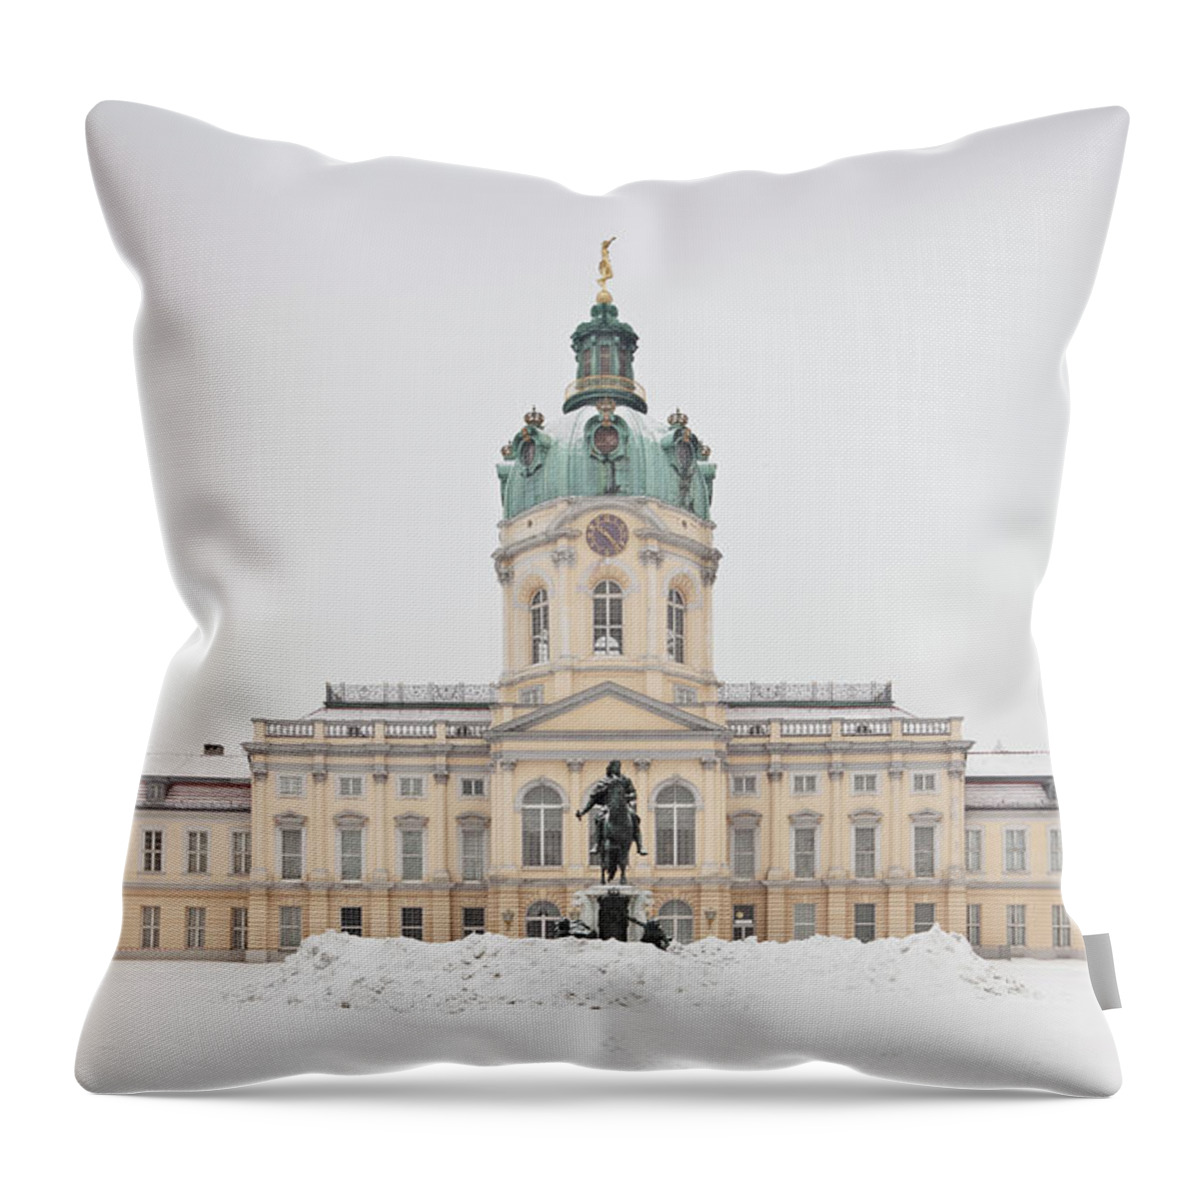 Berlin Throw Pillow featuring the photograph Charlottenburg Palace, Berlin by David Clapp